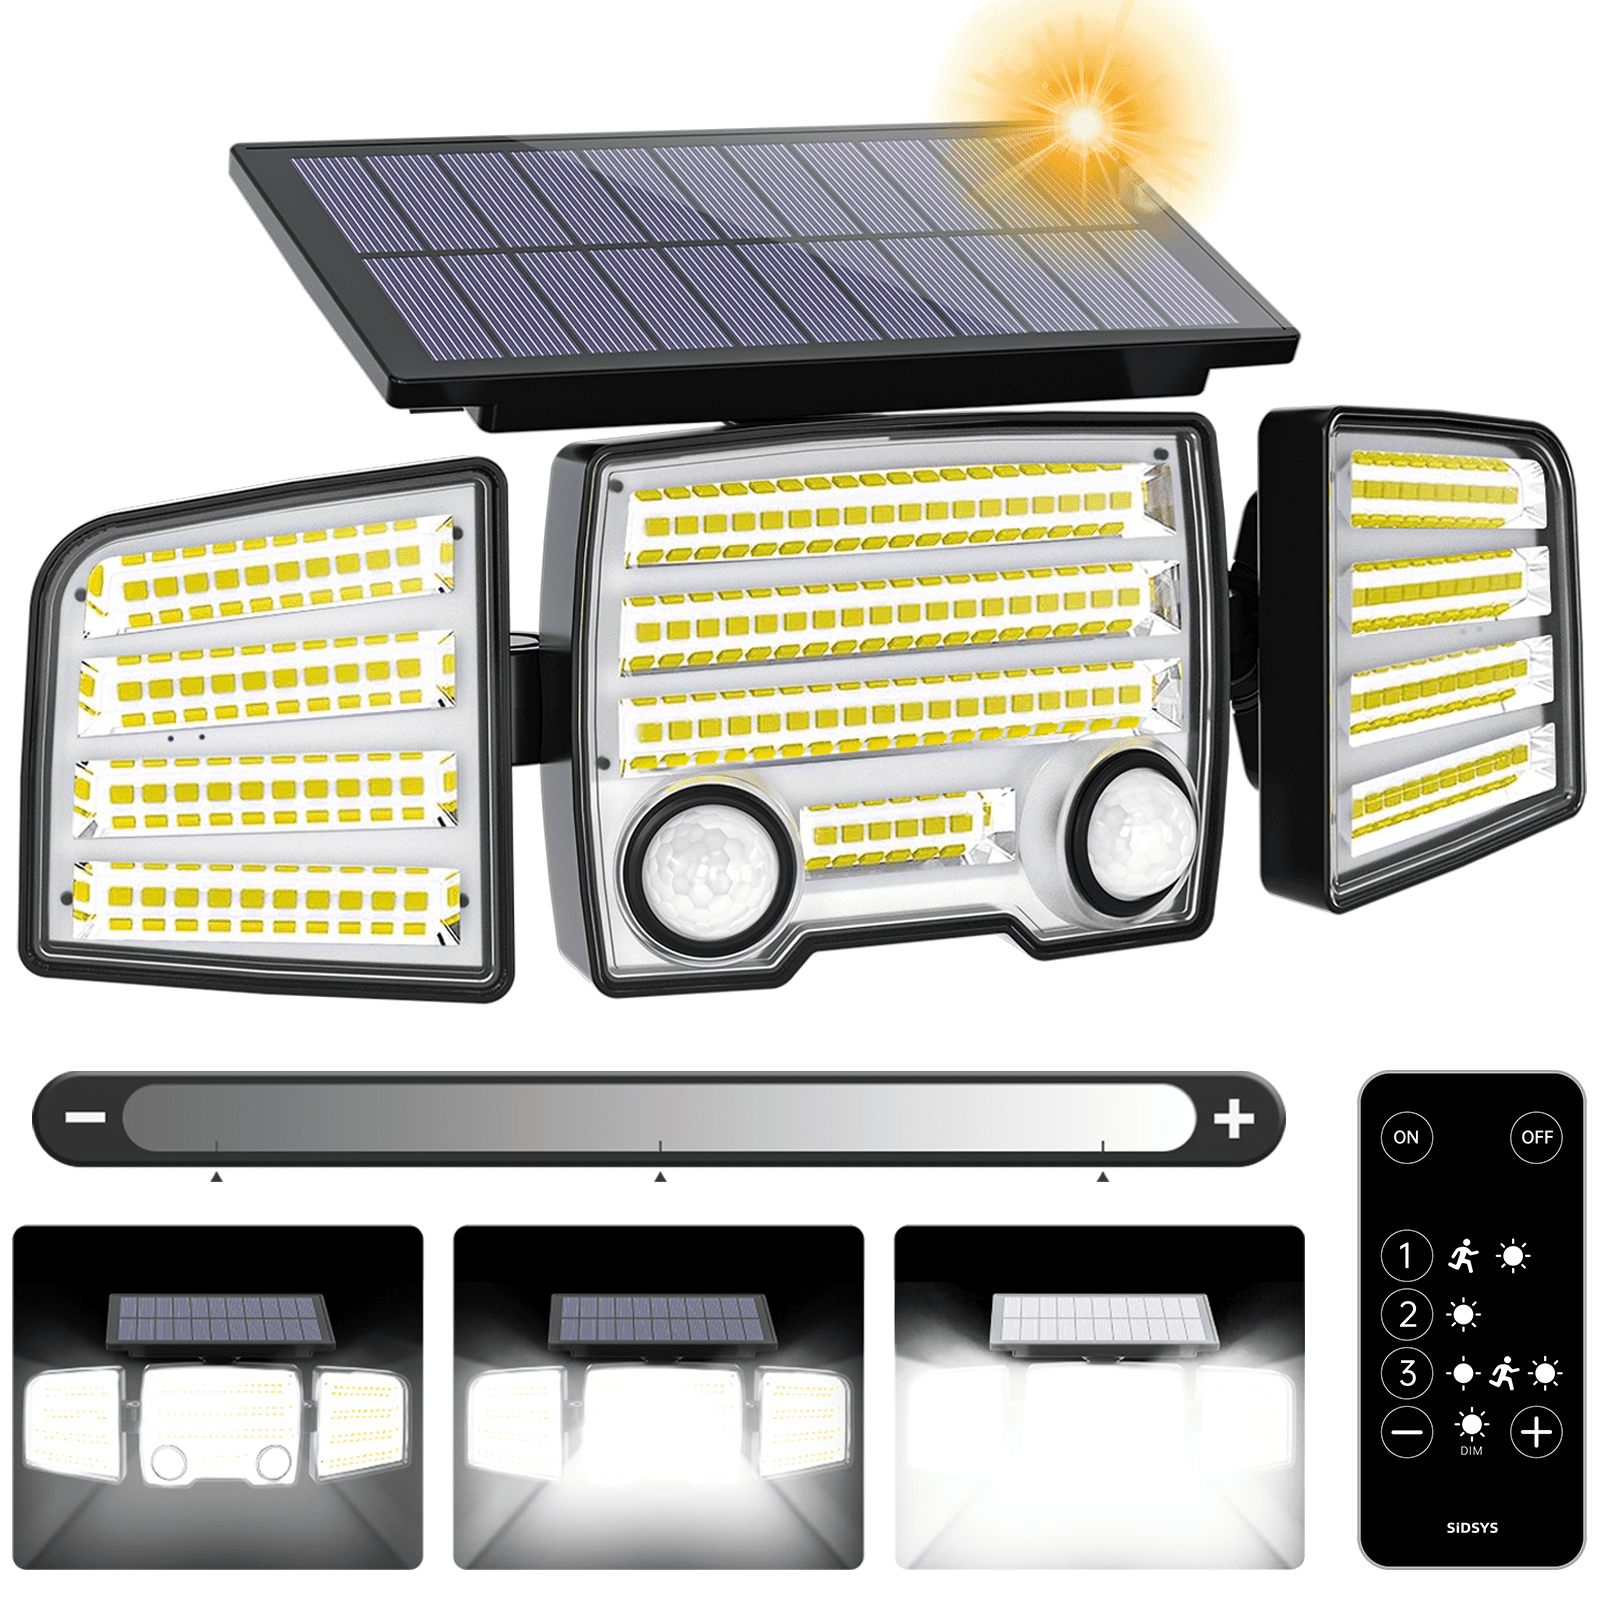 JESLED Black Low Voltage Solar Powered Integrated LED Spot Light & Reviews